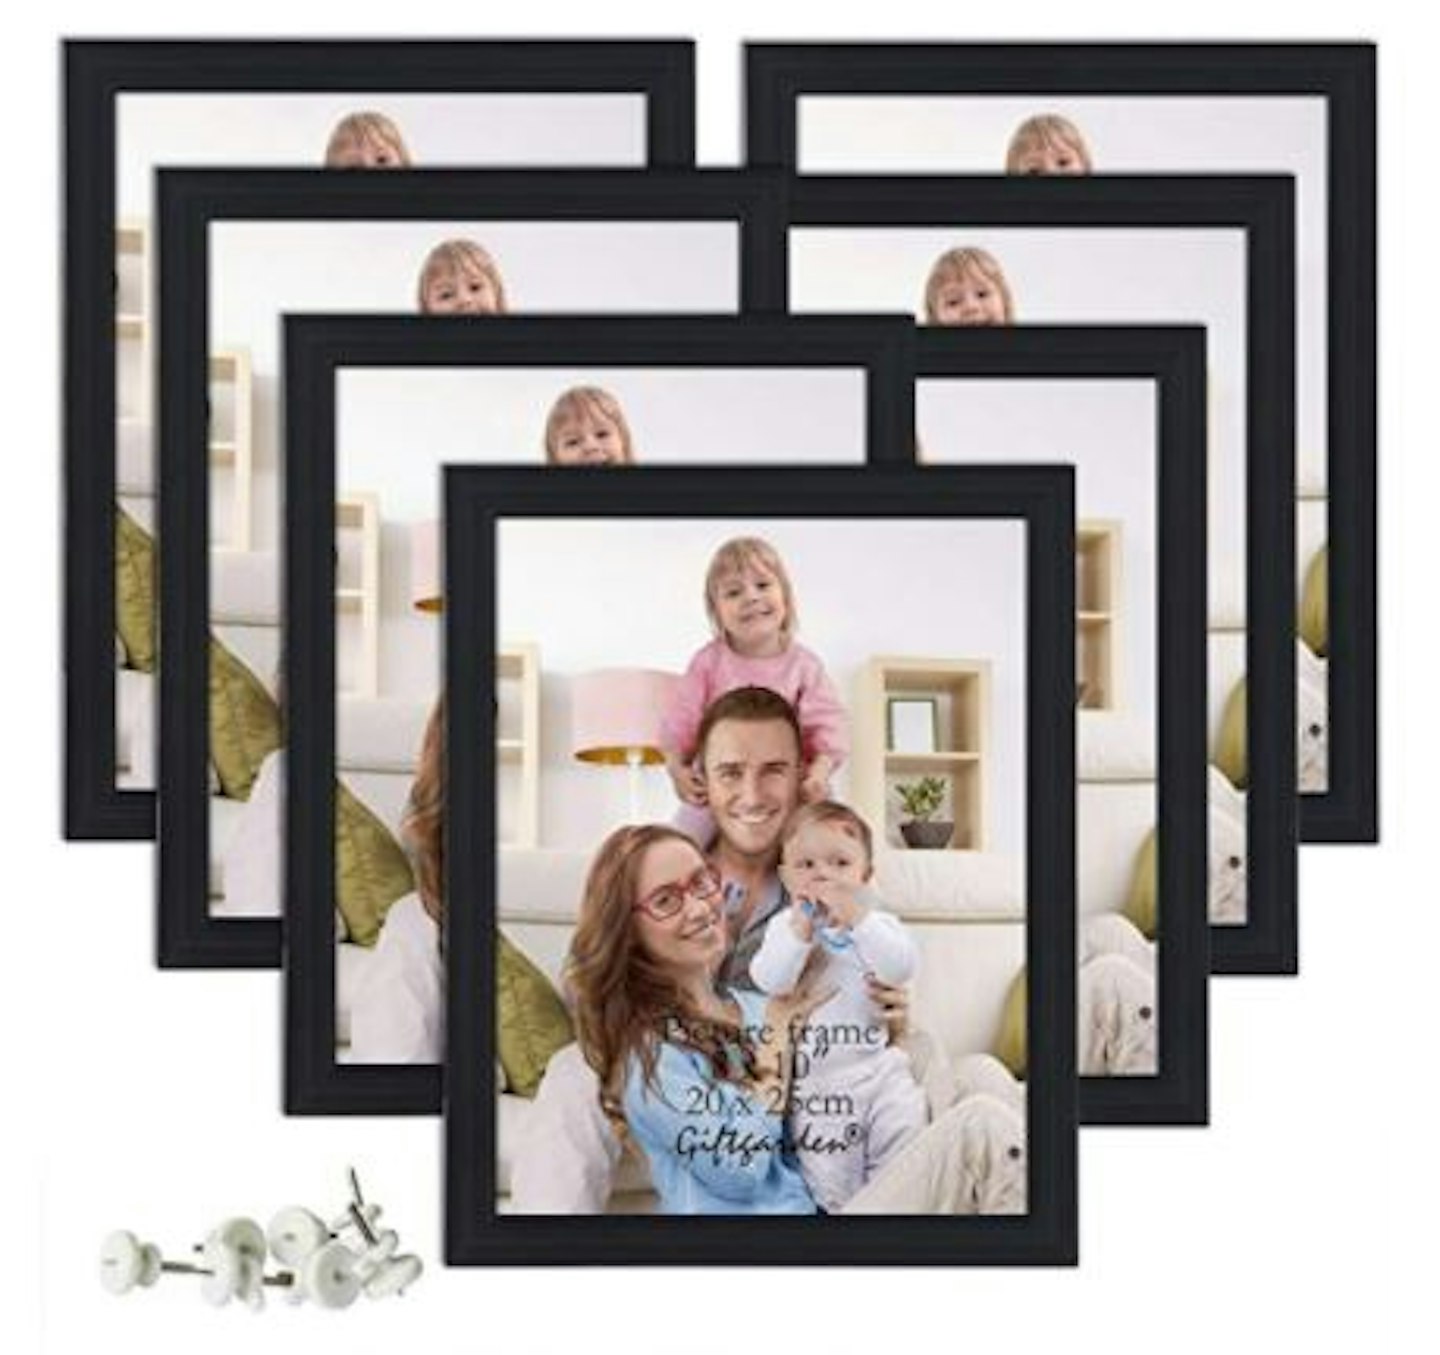 Giftgarden 10x8 Photo Frames Picture Frame Set